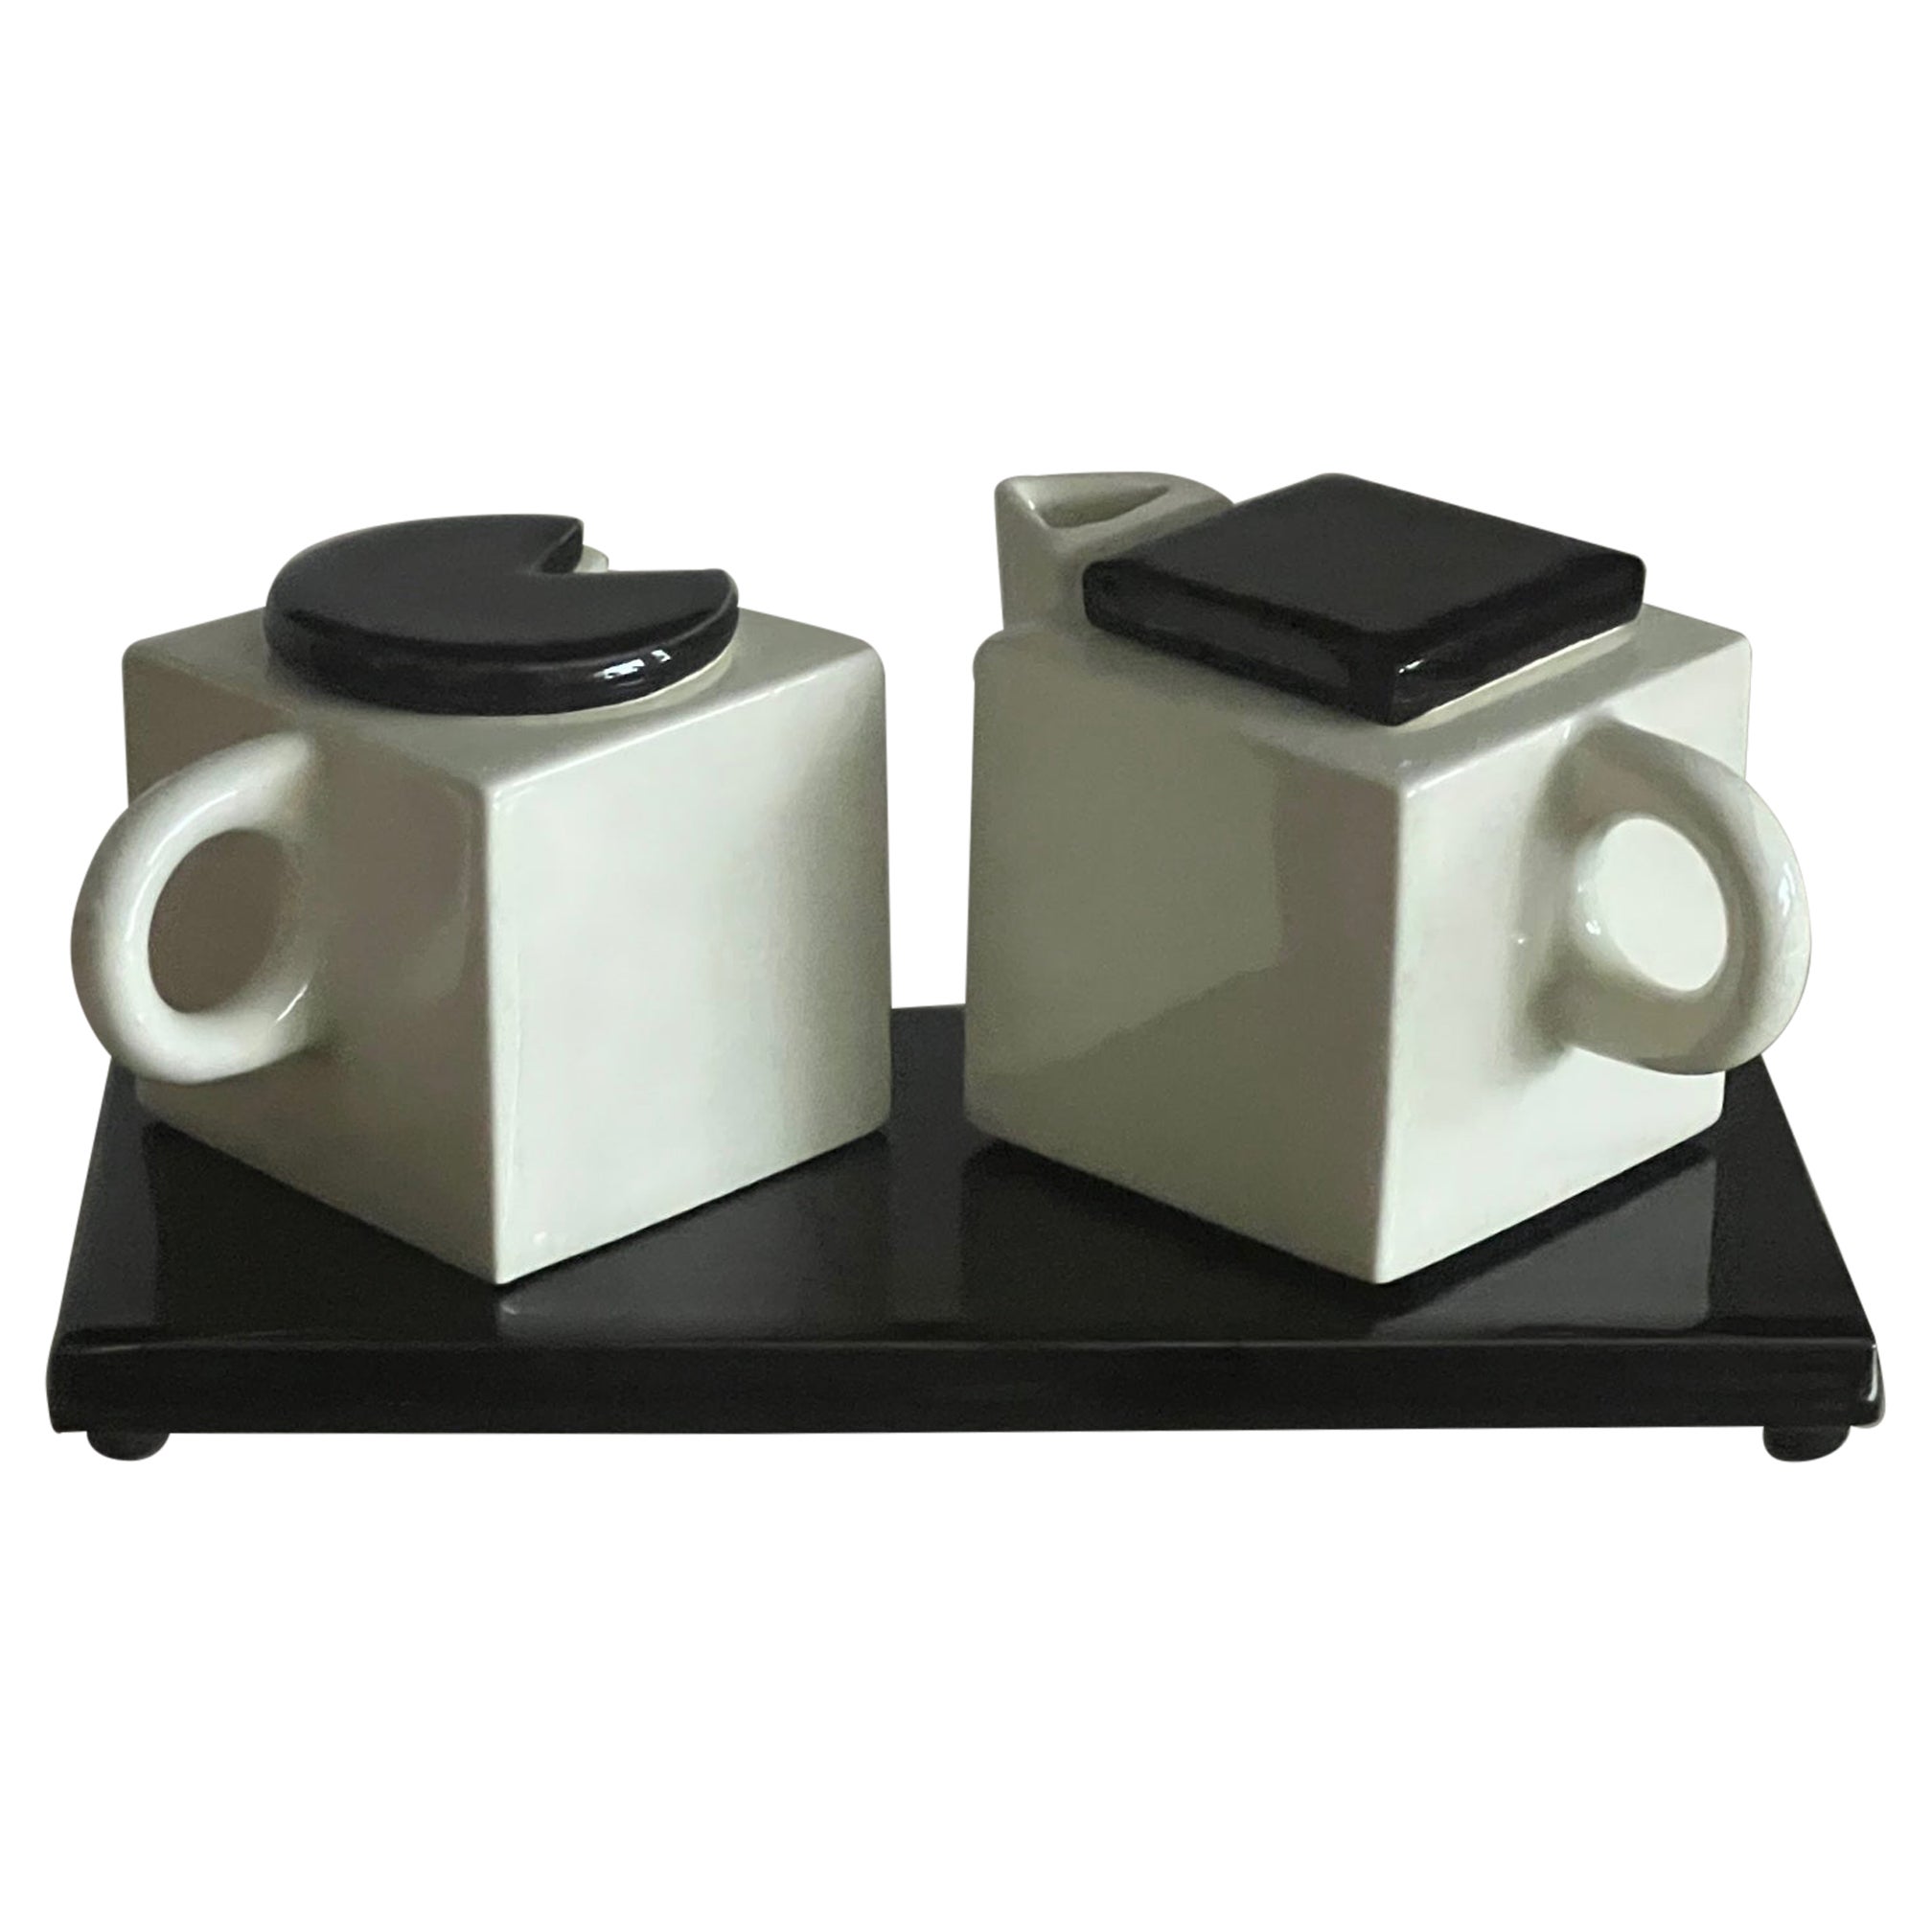 Marek Cecula Ceramic Set For Sale